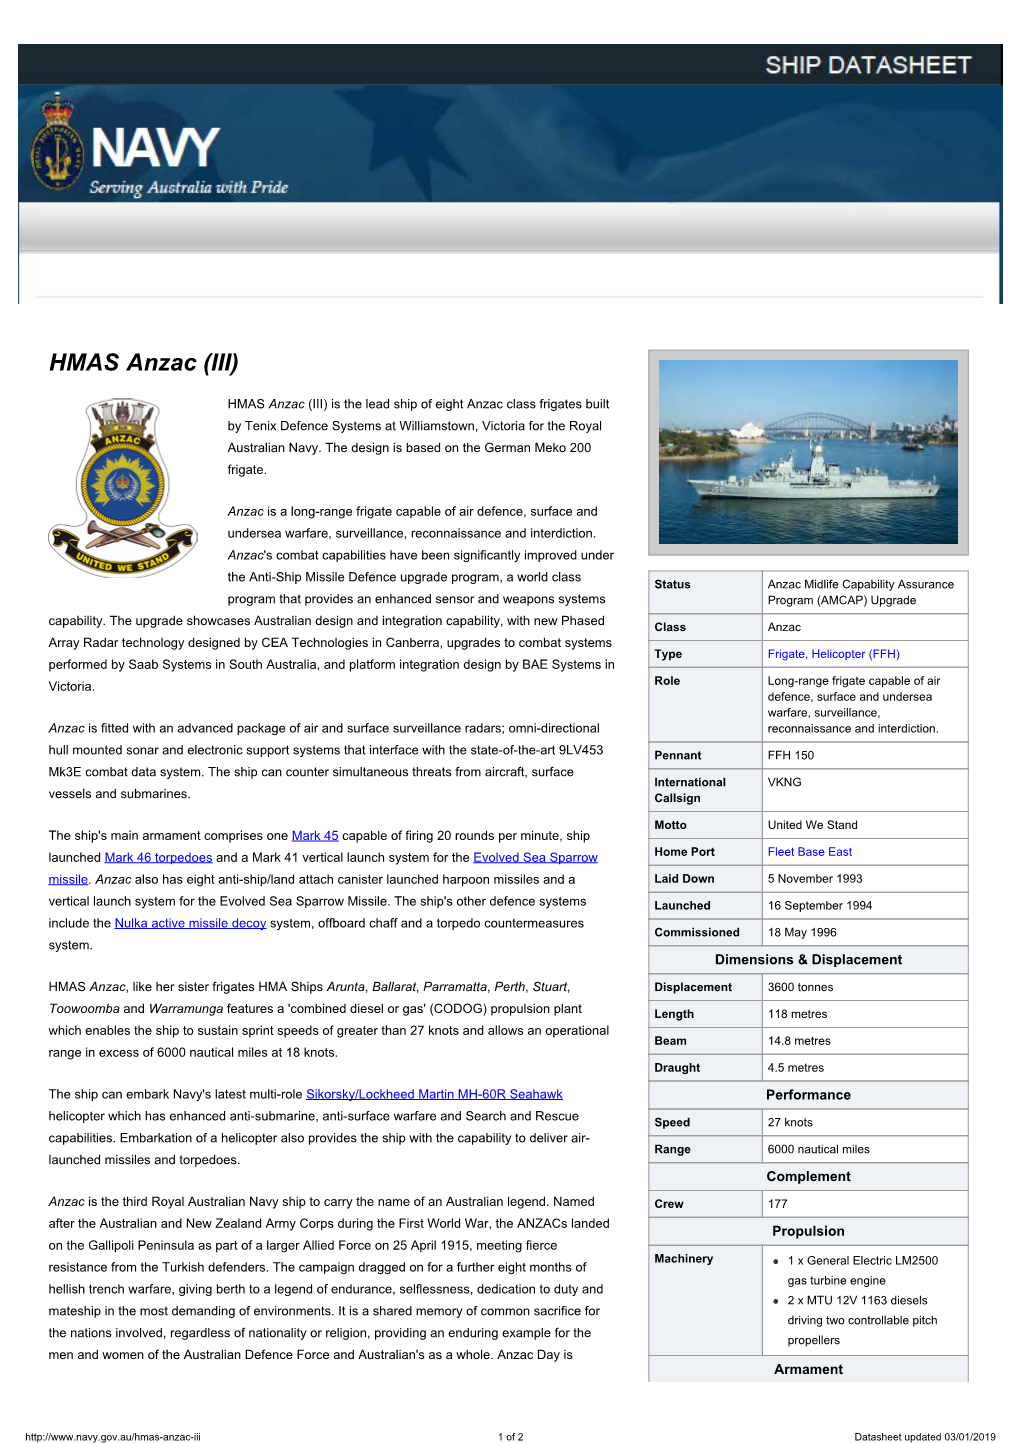 HMAS Anzac (III) | Royal Australian Navy